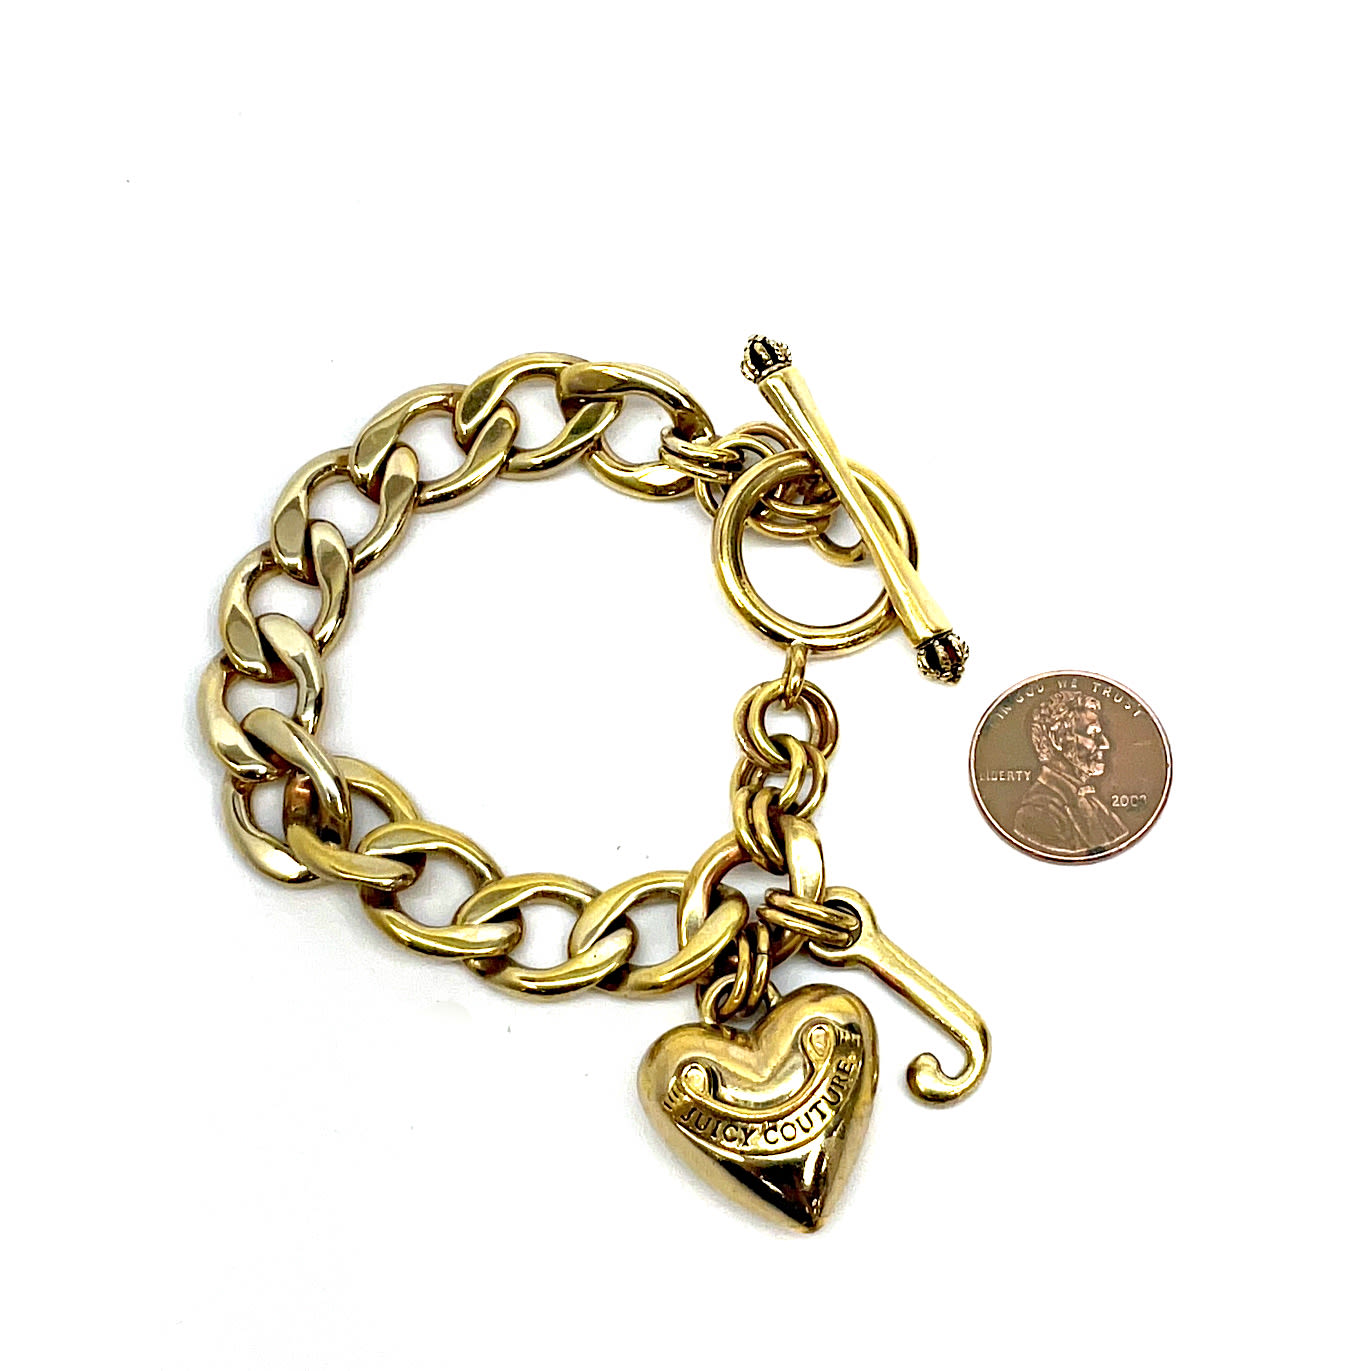 Juicy Couture Charm Bracelet Starter Gold Tone G&P III Heart Charm 7.5”  Toggle | eBay